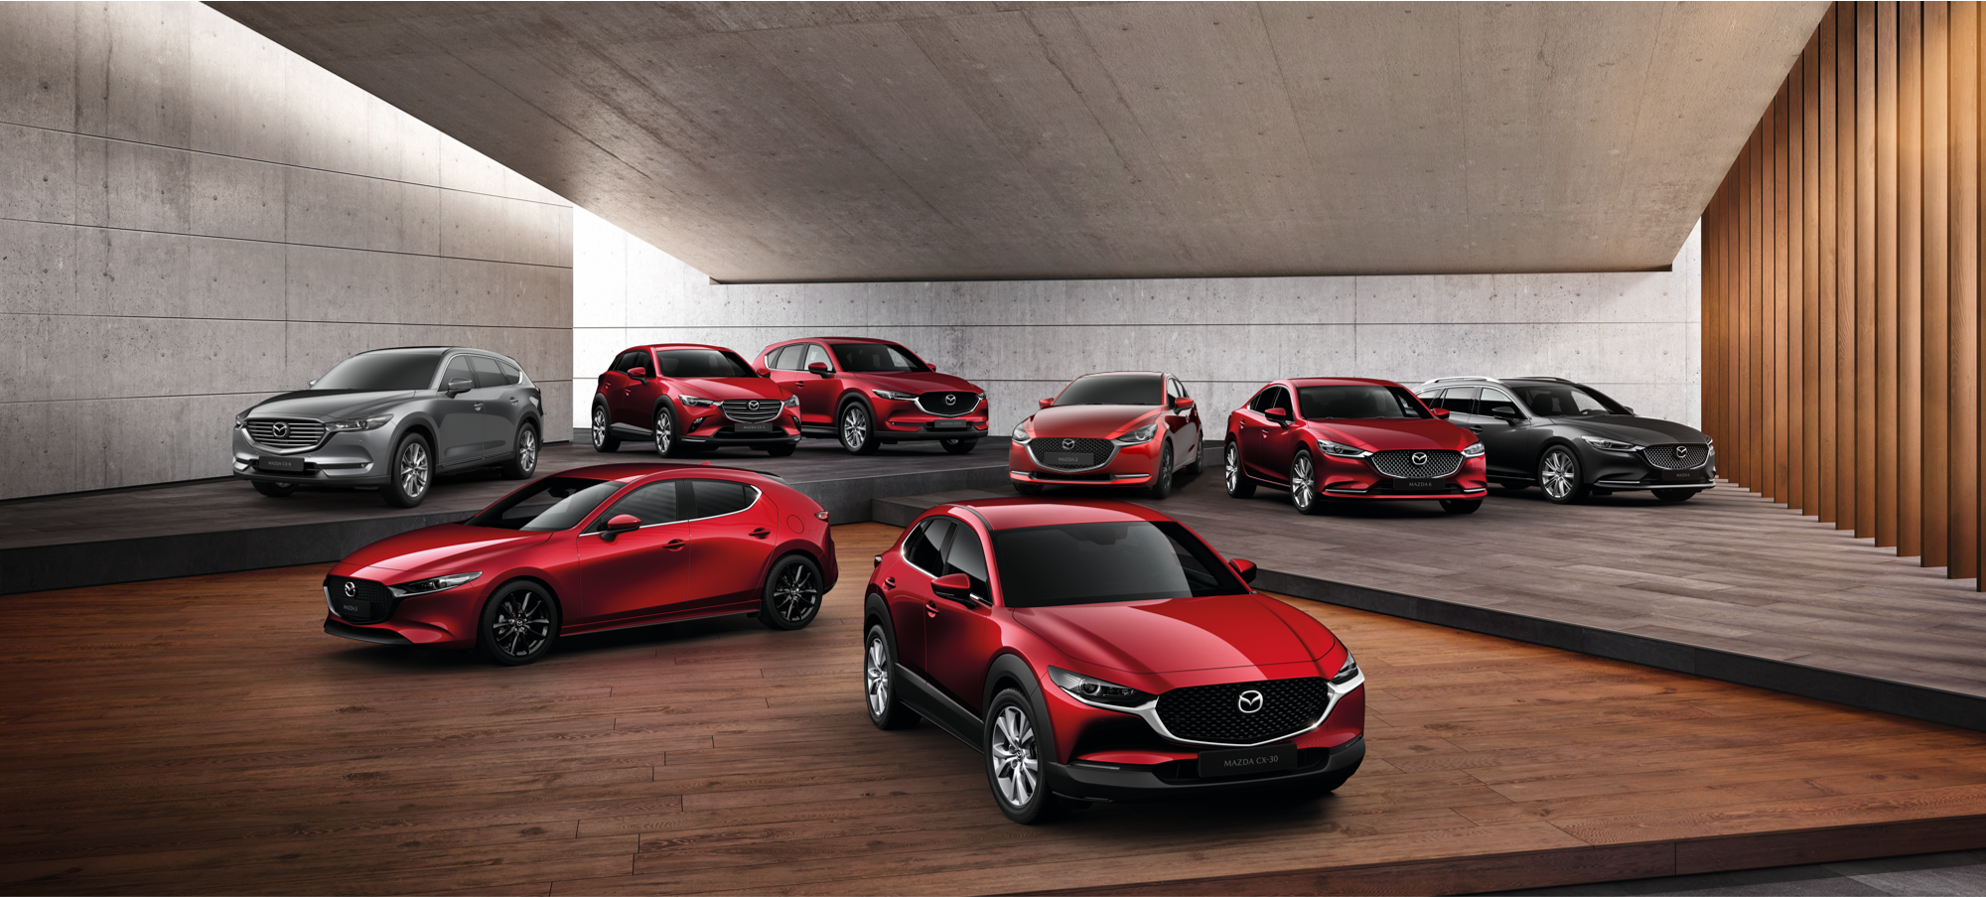 Mazda Car Line Up